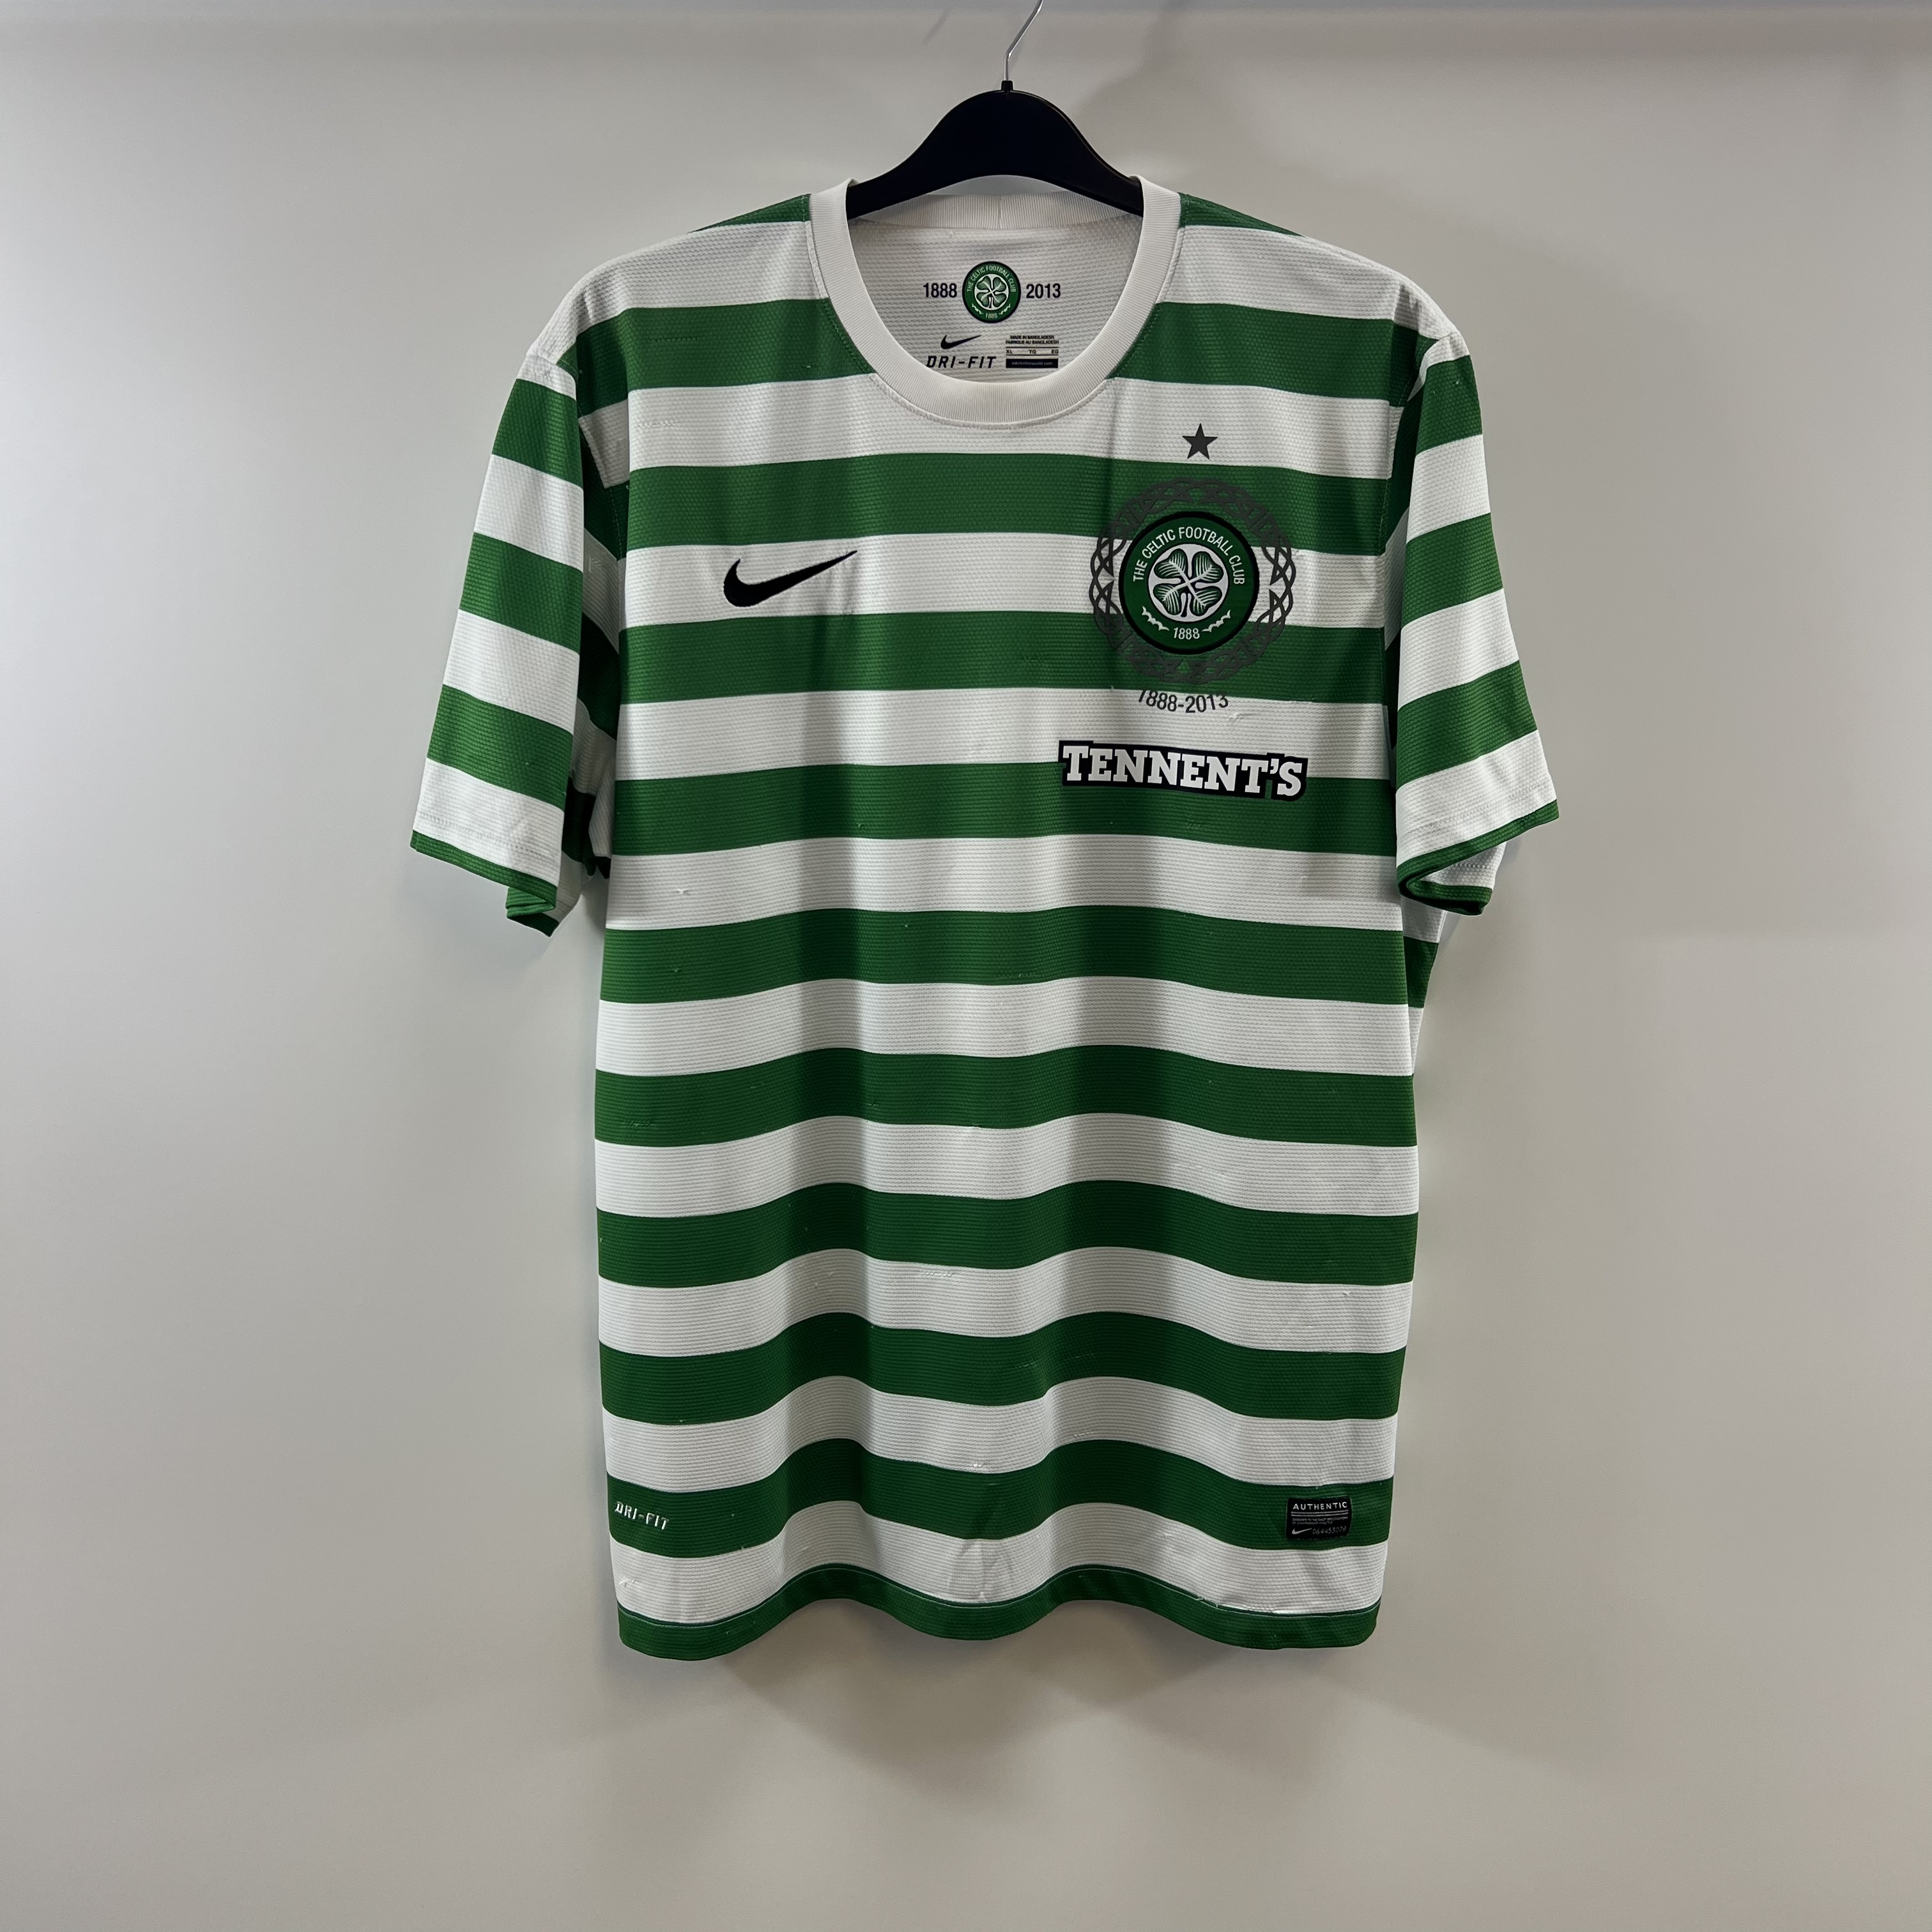 Celtic 12/13 Nike 125th Anniversary Home Kit - Football Shirt